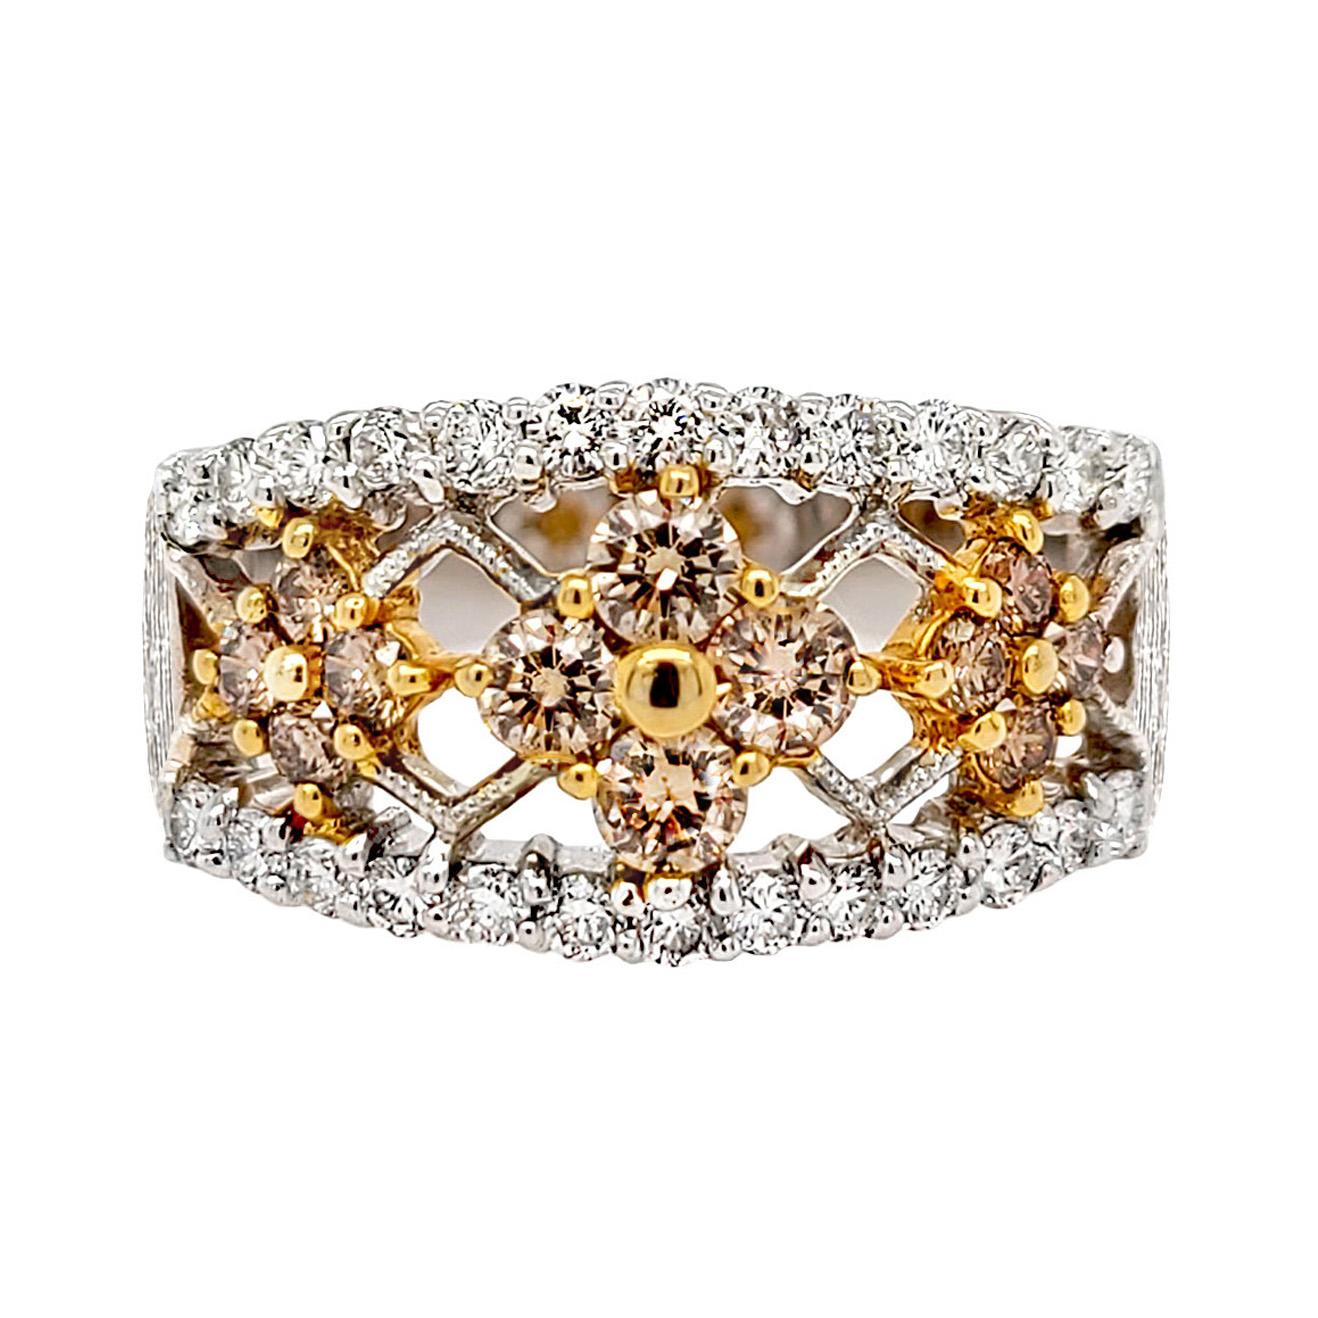 Italian Designer Florentine Finished 18 Karat Gold Diamond Ring